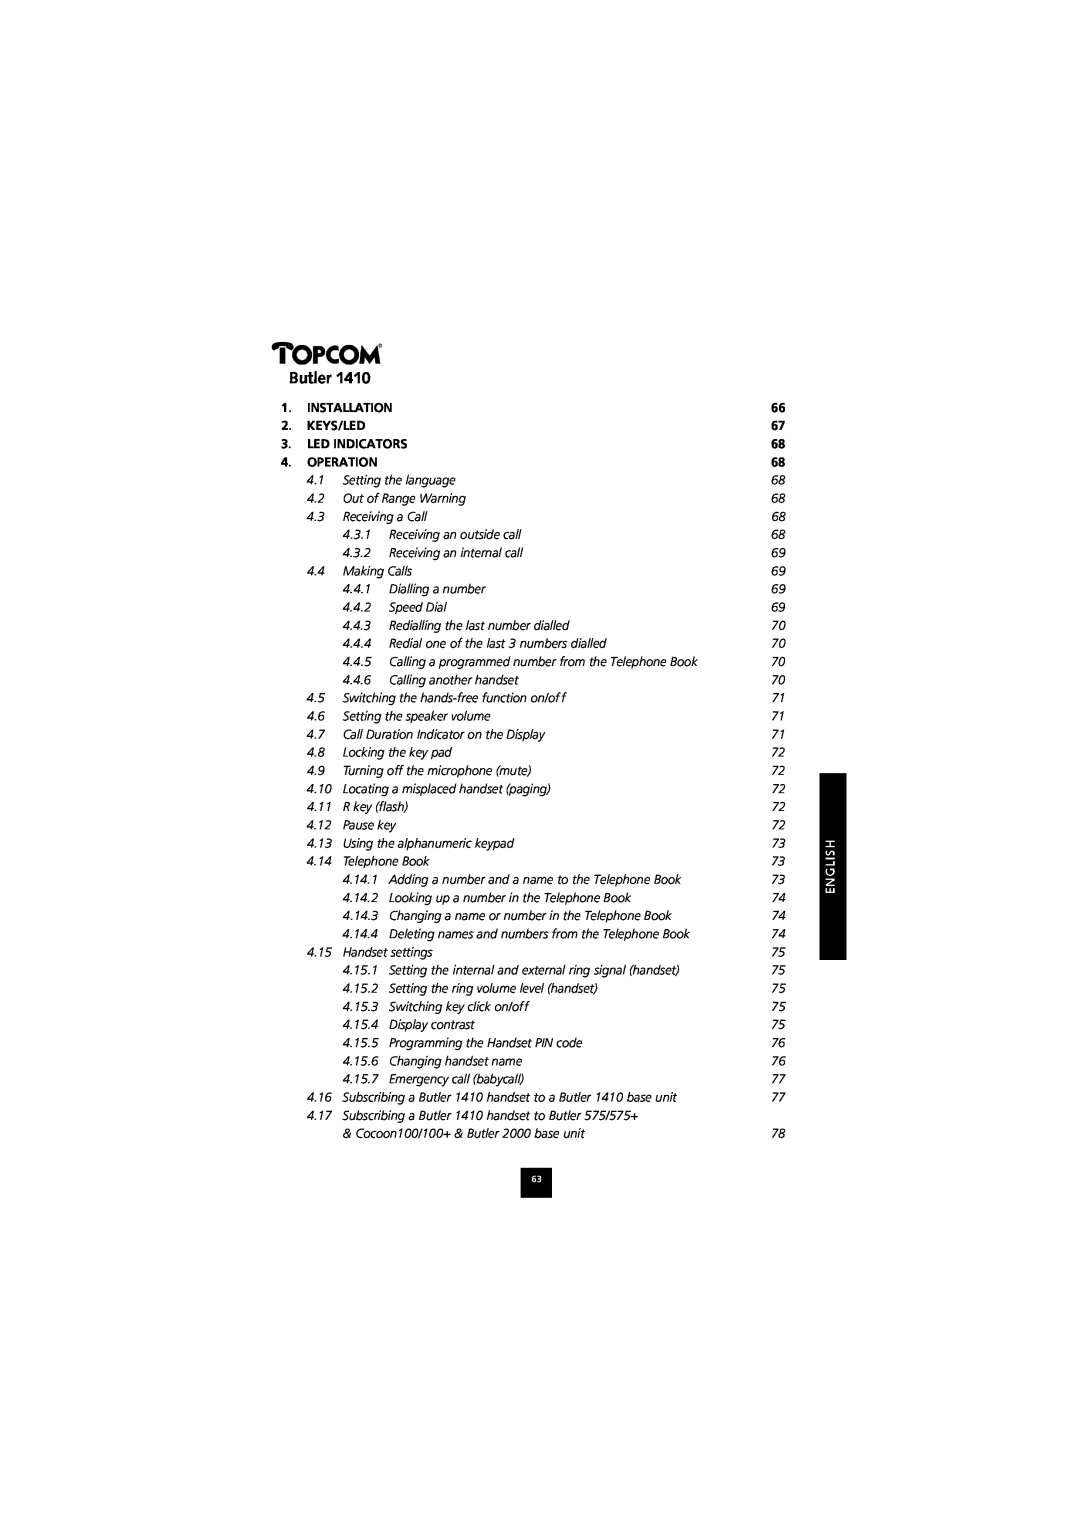 Topcom 1410 manual Butler, Installation, Keys/Led, Led Indicators, Operation 